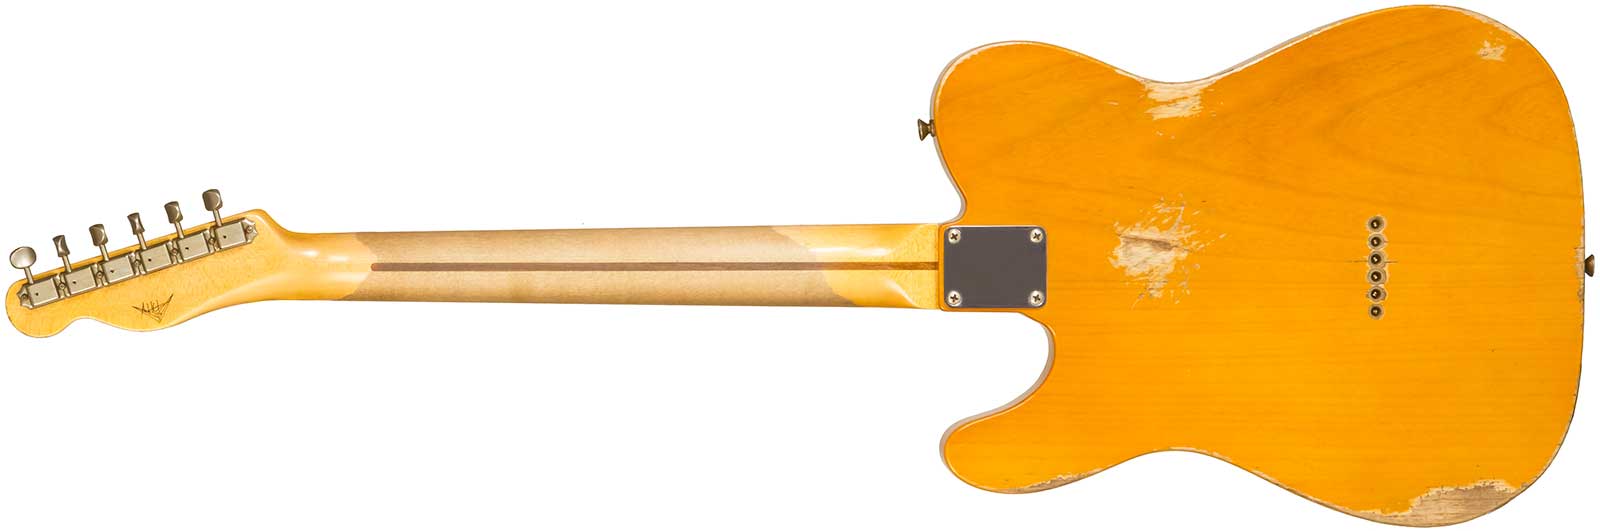 Fender Custom Shop Tele 1952 Masterbuilt A.hicks 2s Ht Mn #r126811 - Relic Smoked Butterscotch Blonde - Guitare Électrique Forme Tel - Variation 1